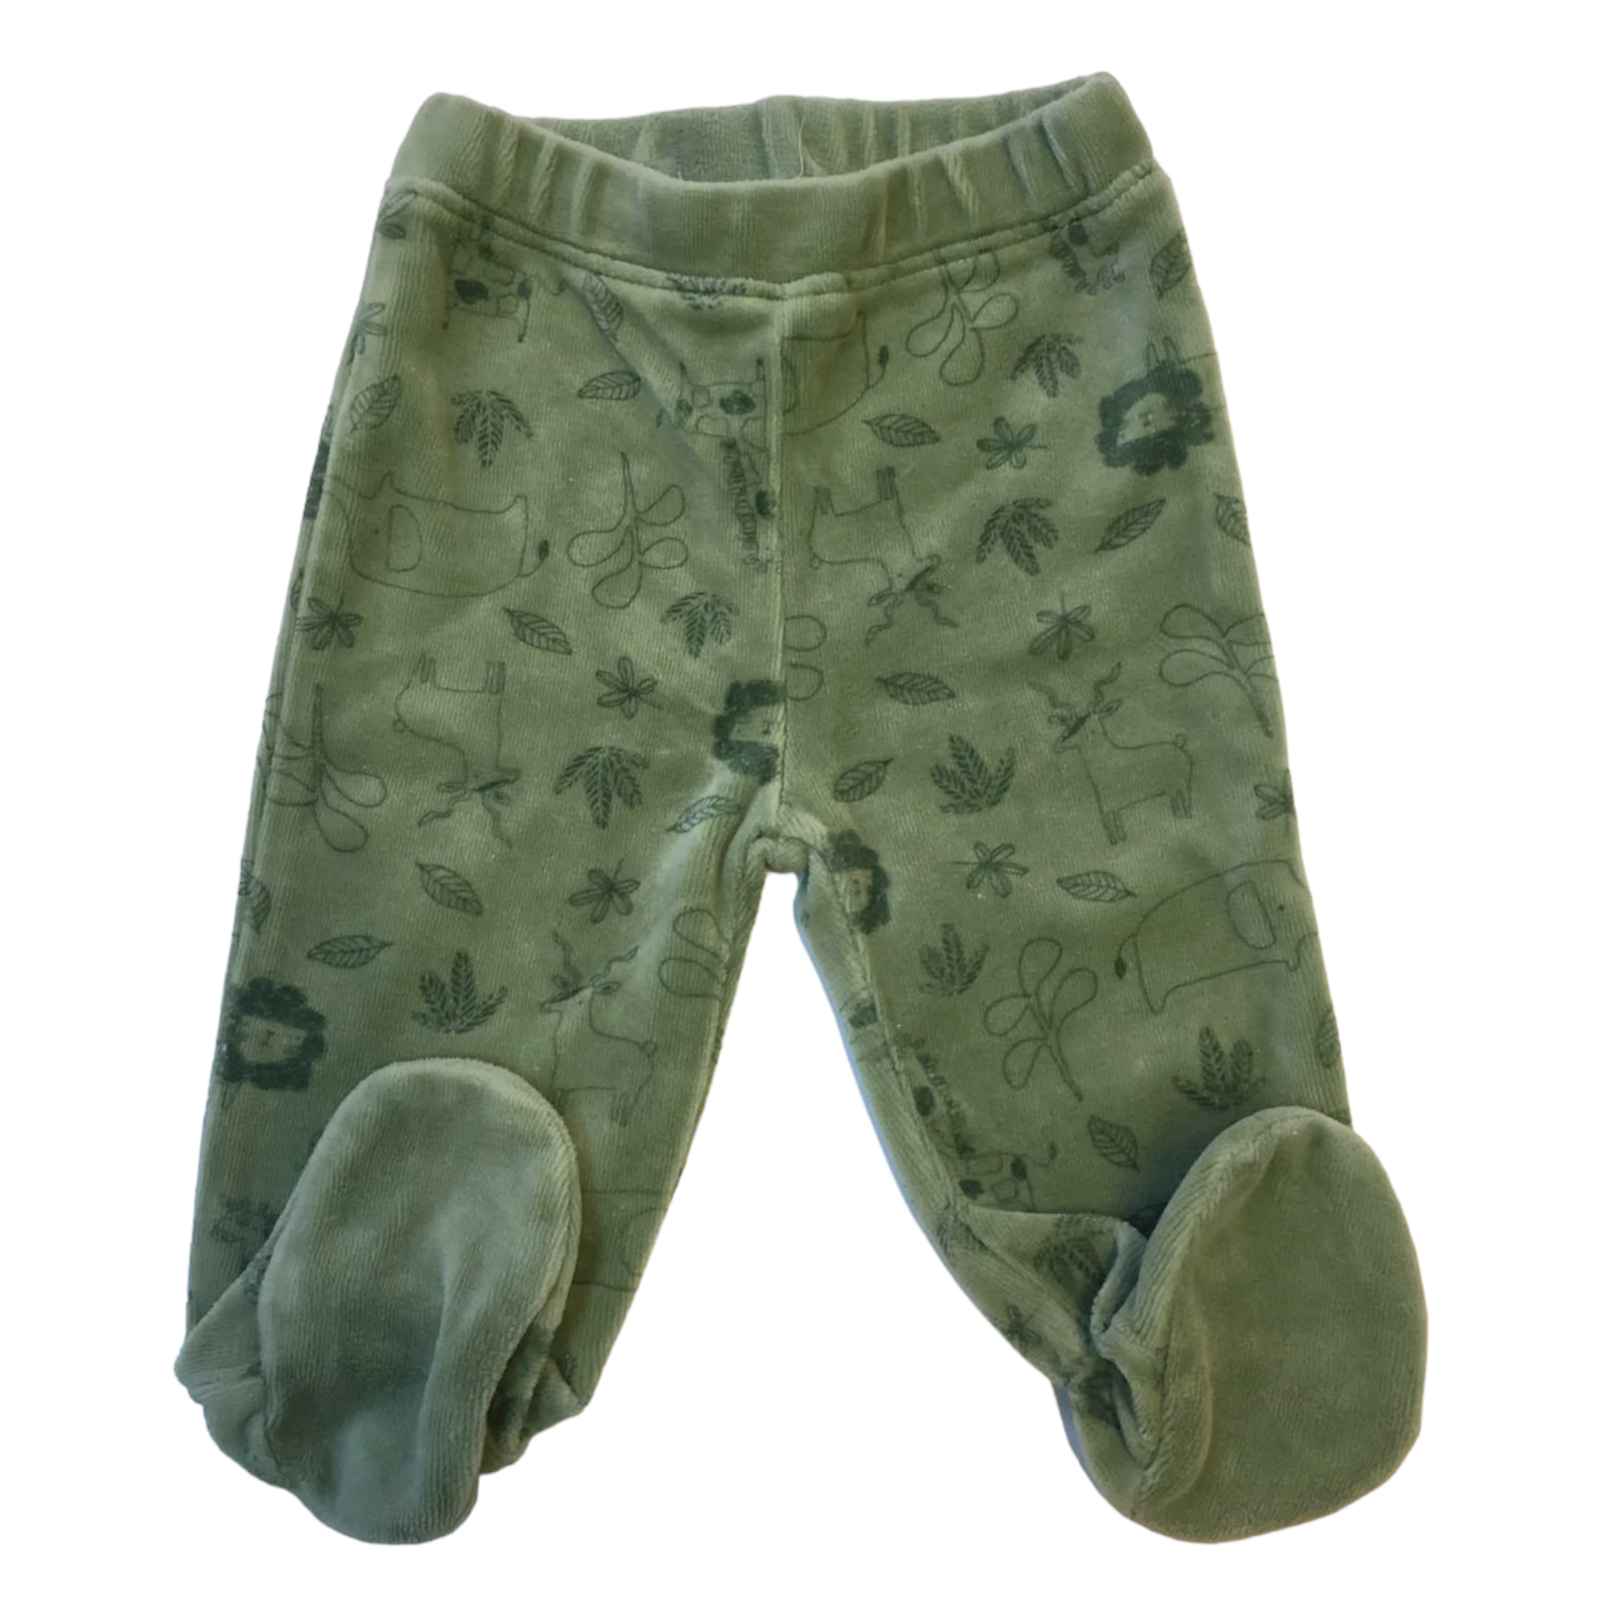 Panty de plush verde diseño animales